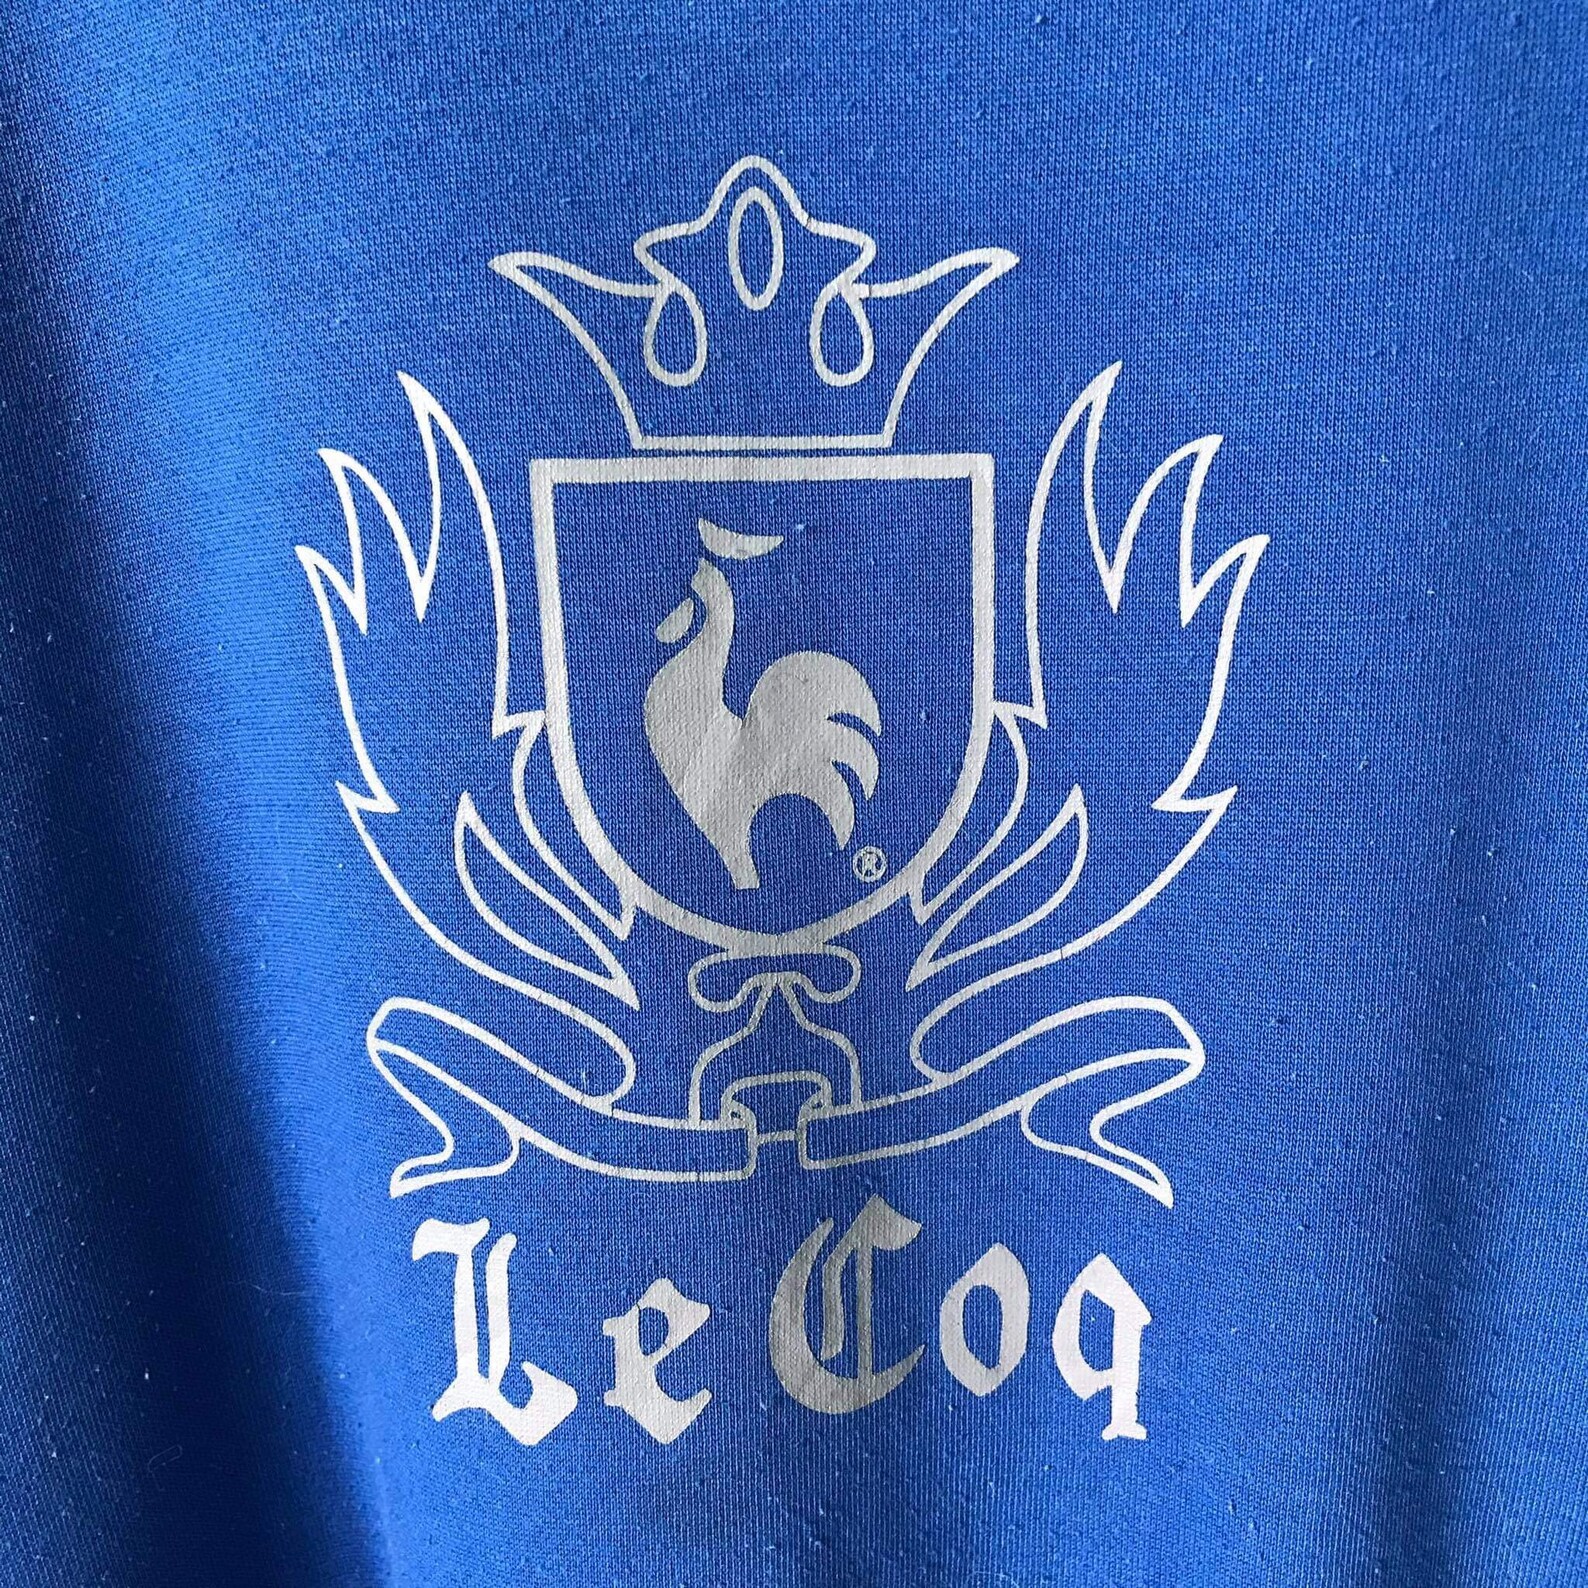 PICK Vintage Le Coq Sportif Crewneck Big Logo Le Coq Sportif | Etsy